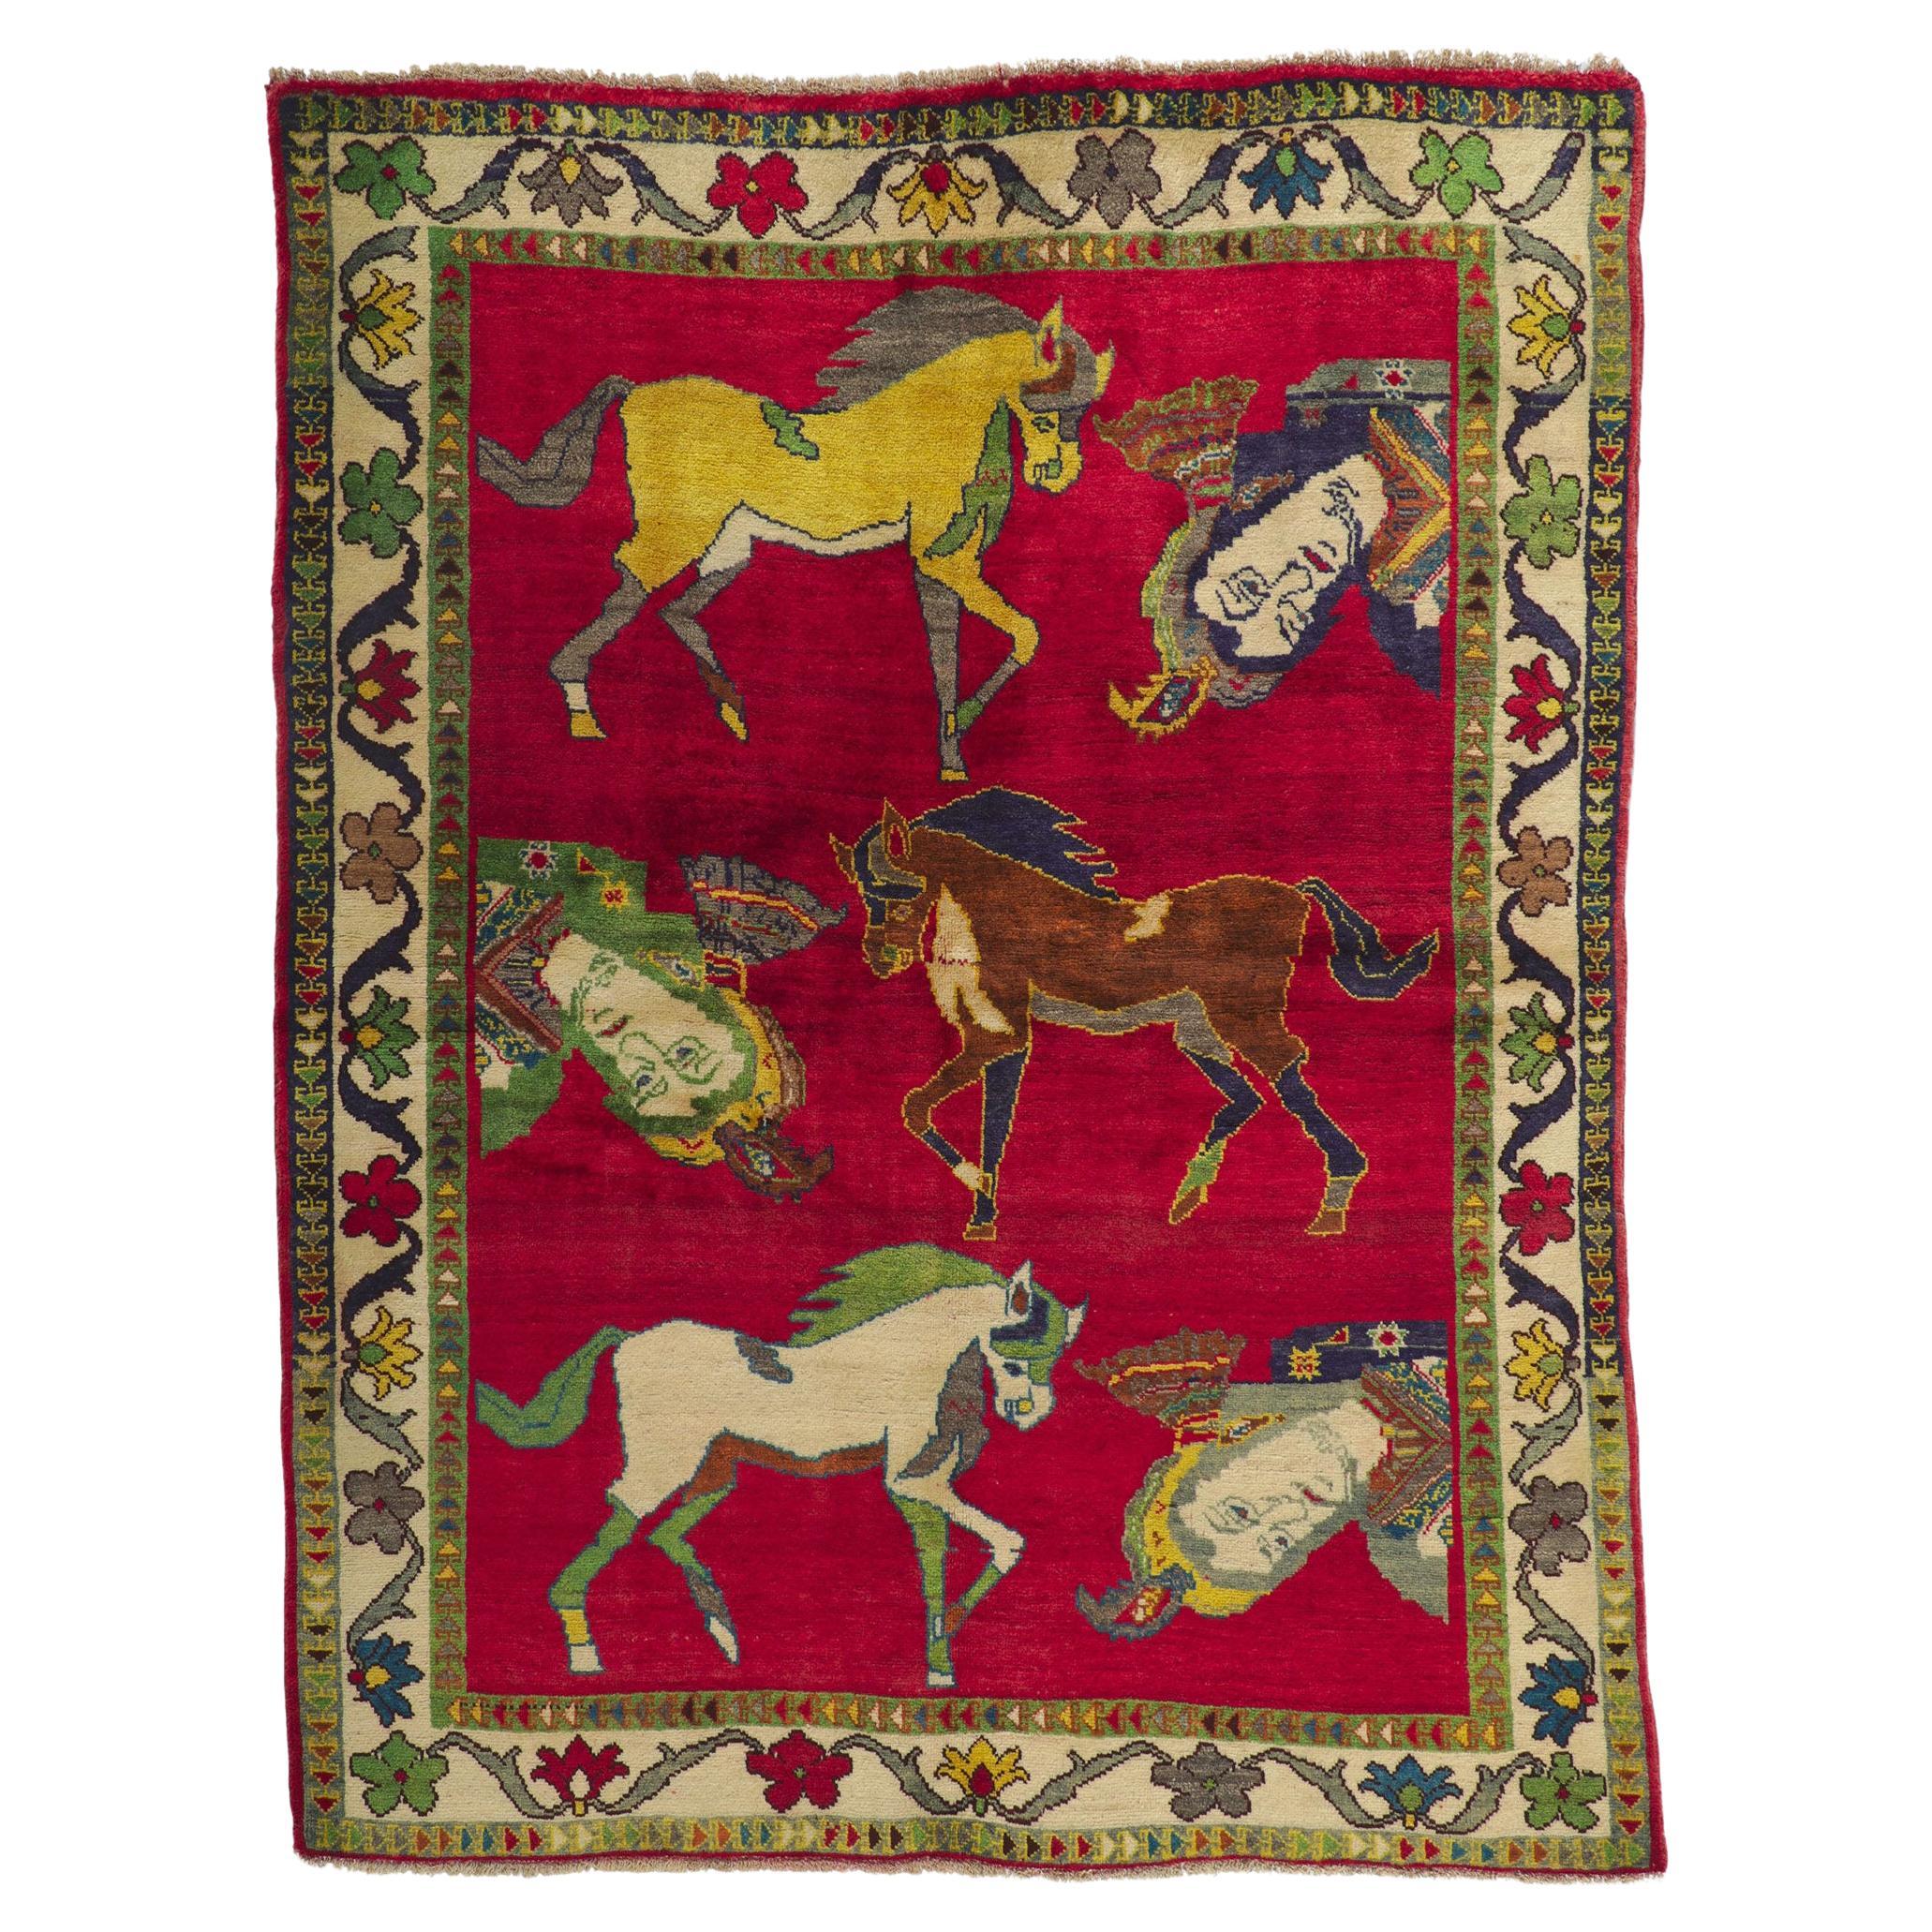 Persischer Shiraz-pictorial-Teppich im Vintage-Stil, Worldly Sophistication Meets Global Chic